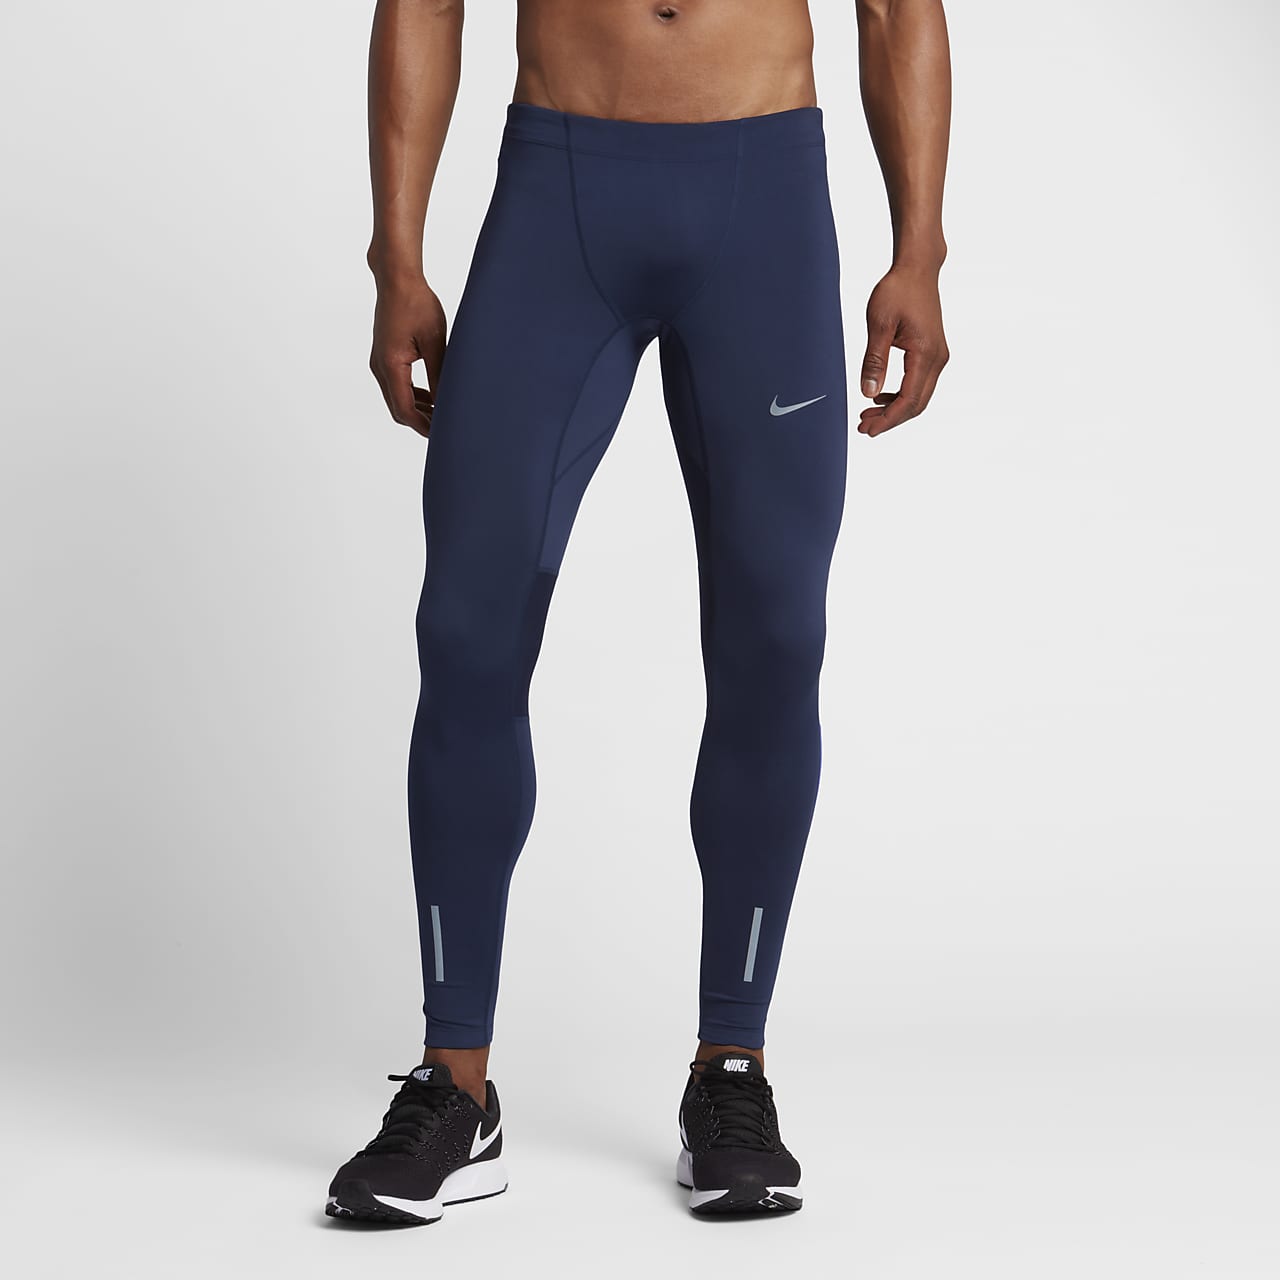 Nike Tech Men's Running Tights.